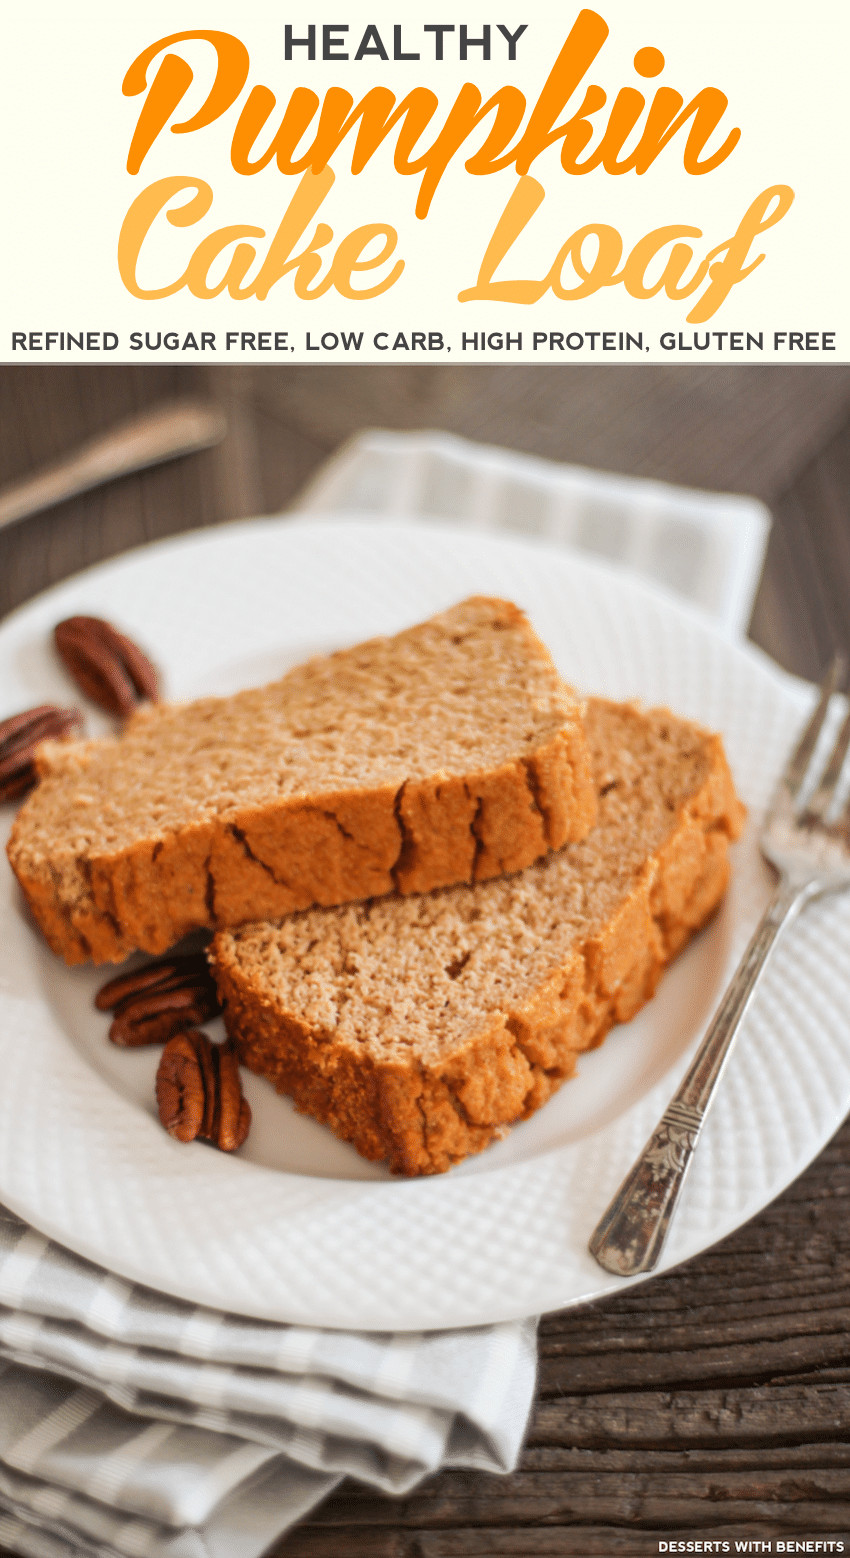 Healthy Gluten Free Dessert Recipes
 Desserts With Benefits Healthy Pumpkin Cake Loaf recipe